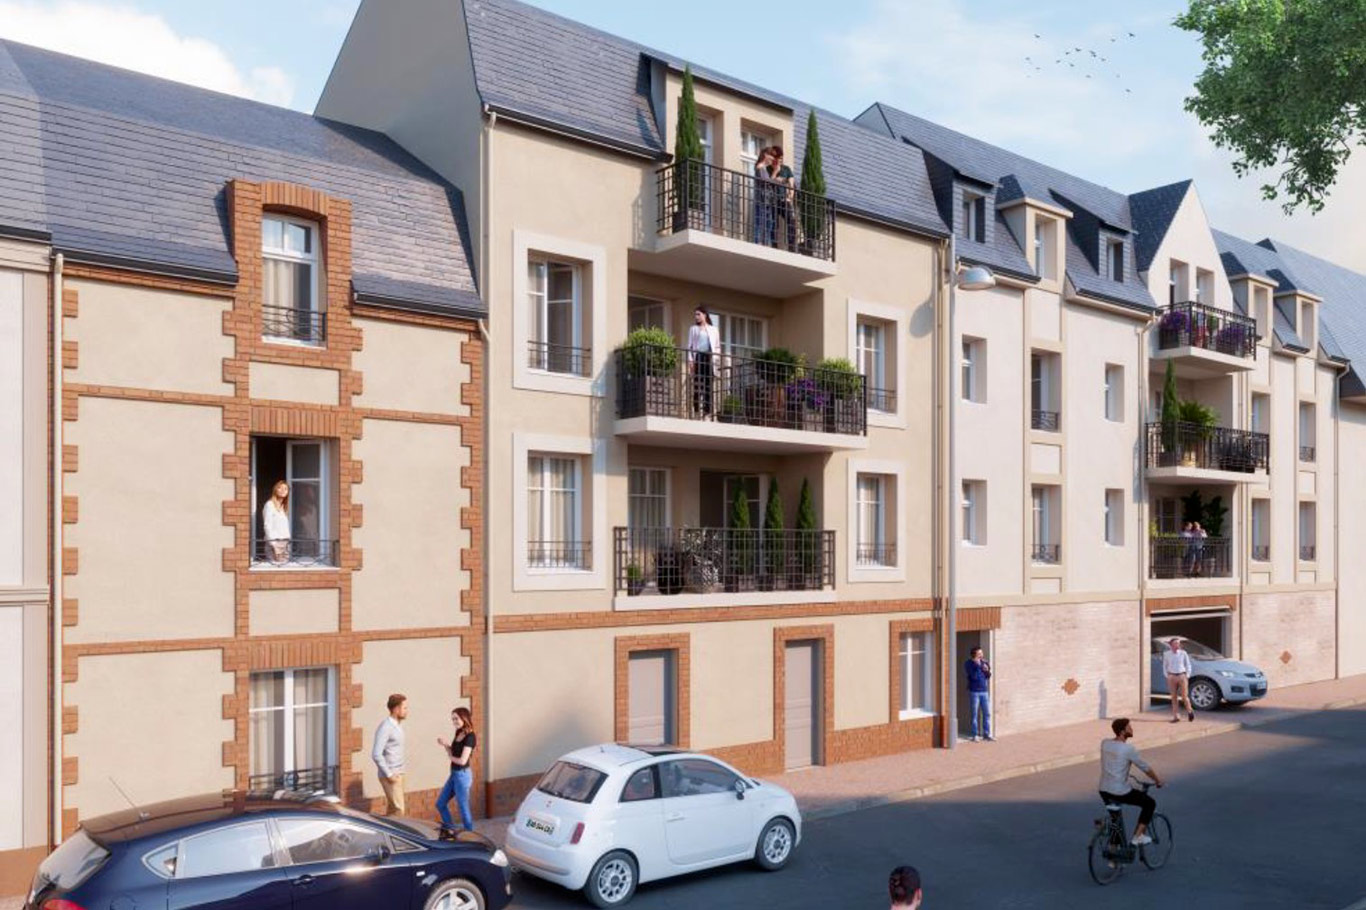 Photo 1 Programme Immobilier Neuf à Deauville - Investissement Locatif - Citizim